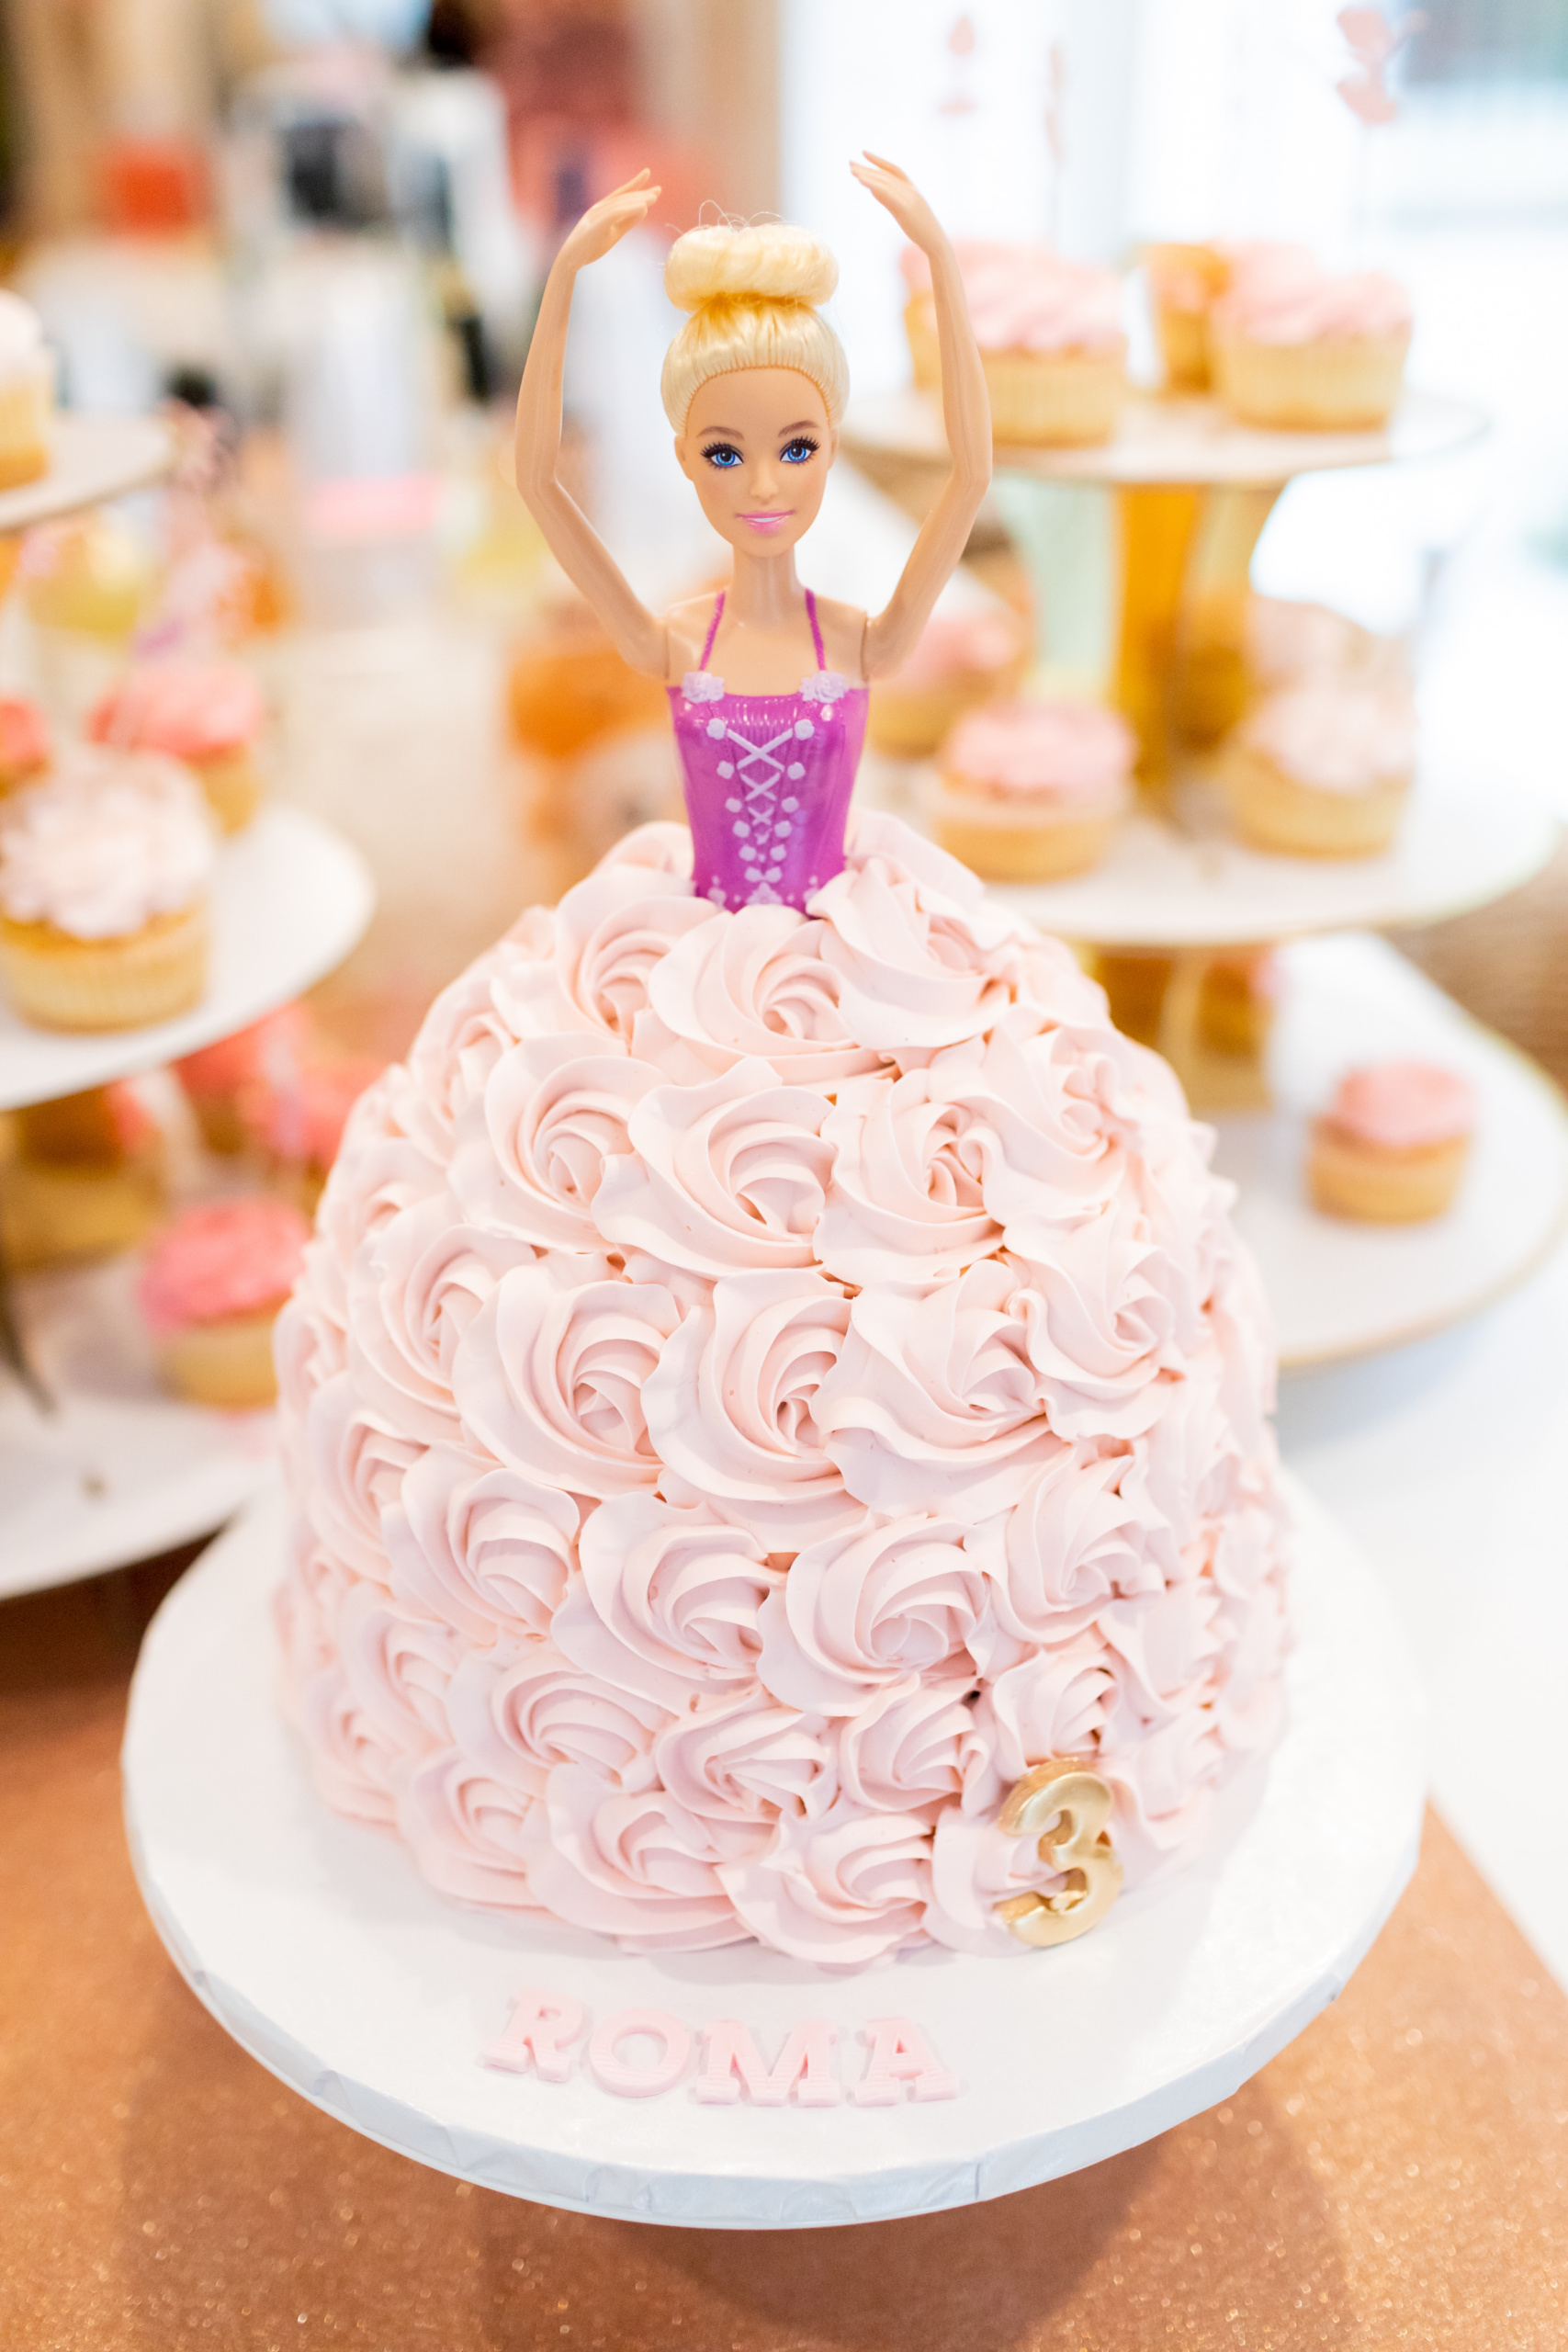 Quick & Beautiful Princess Cake Design Tutorial  Barbie Doll Dress Cake  Decorating Ideas #3 